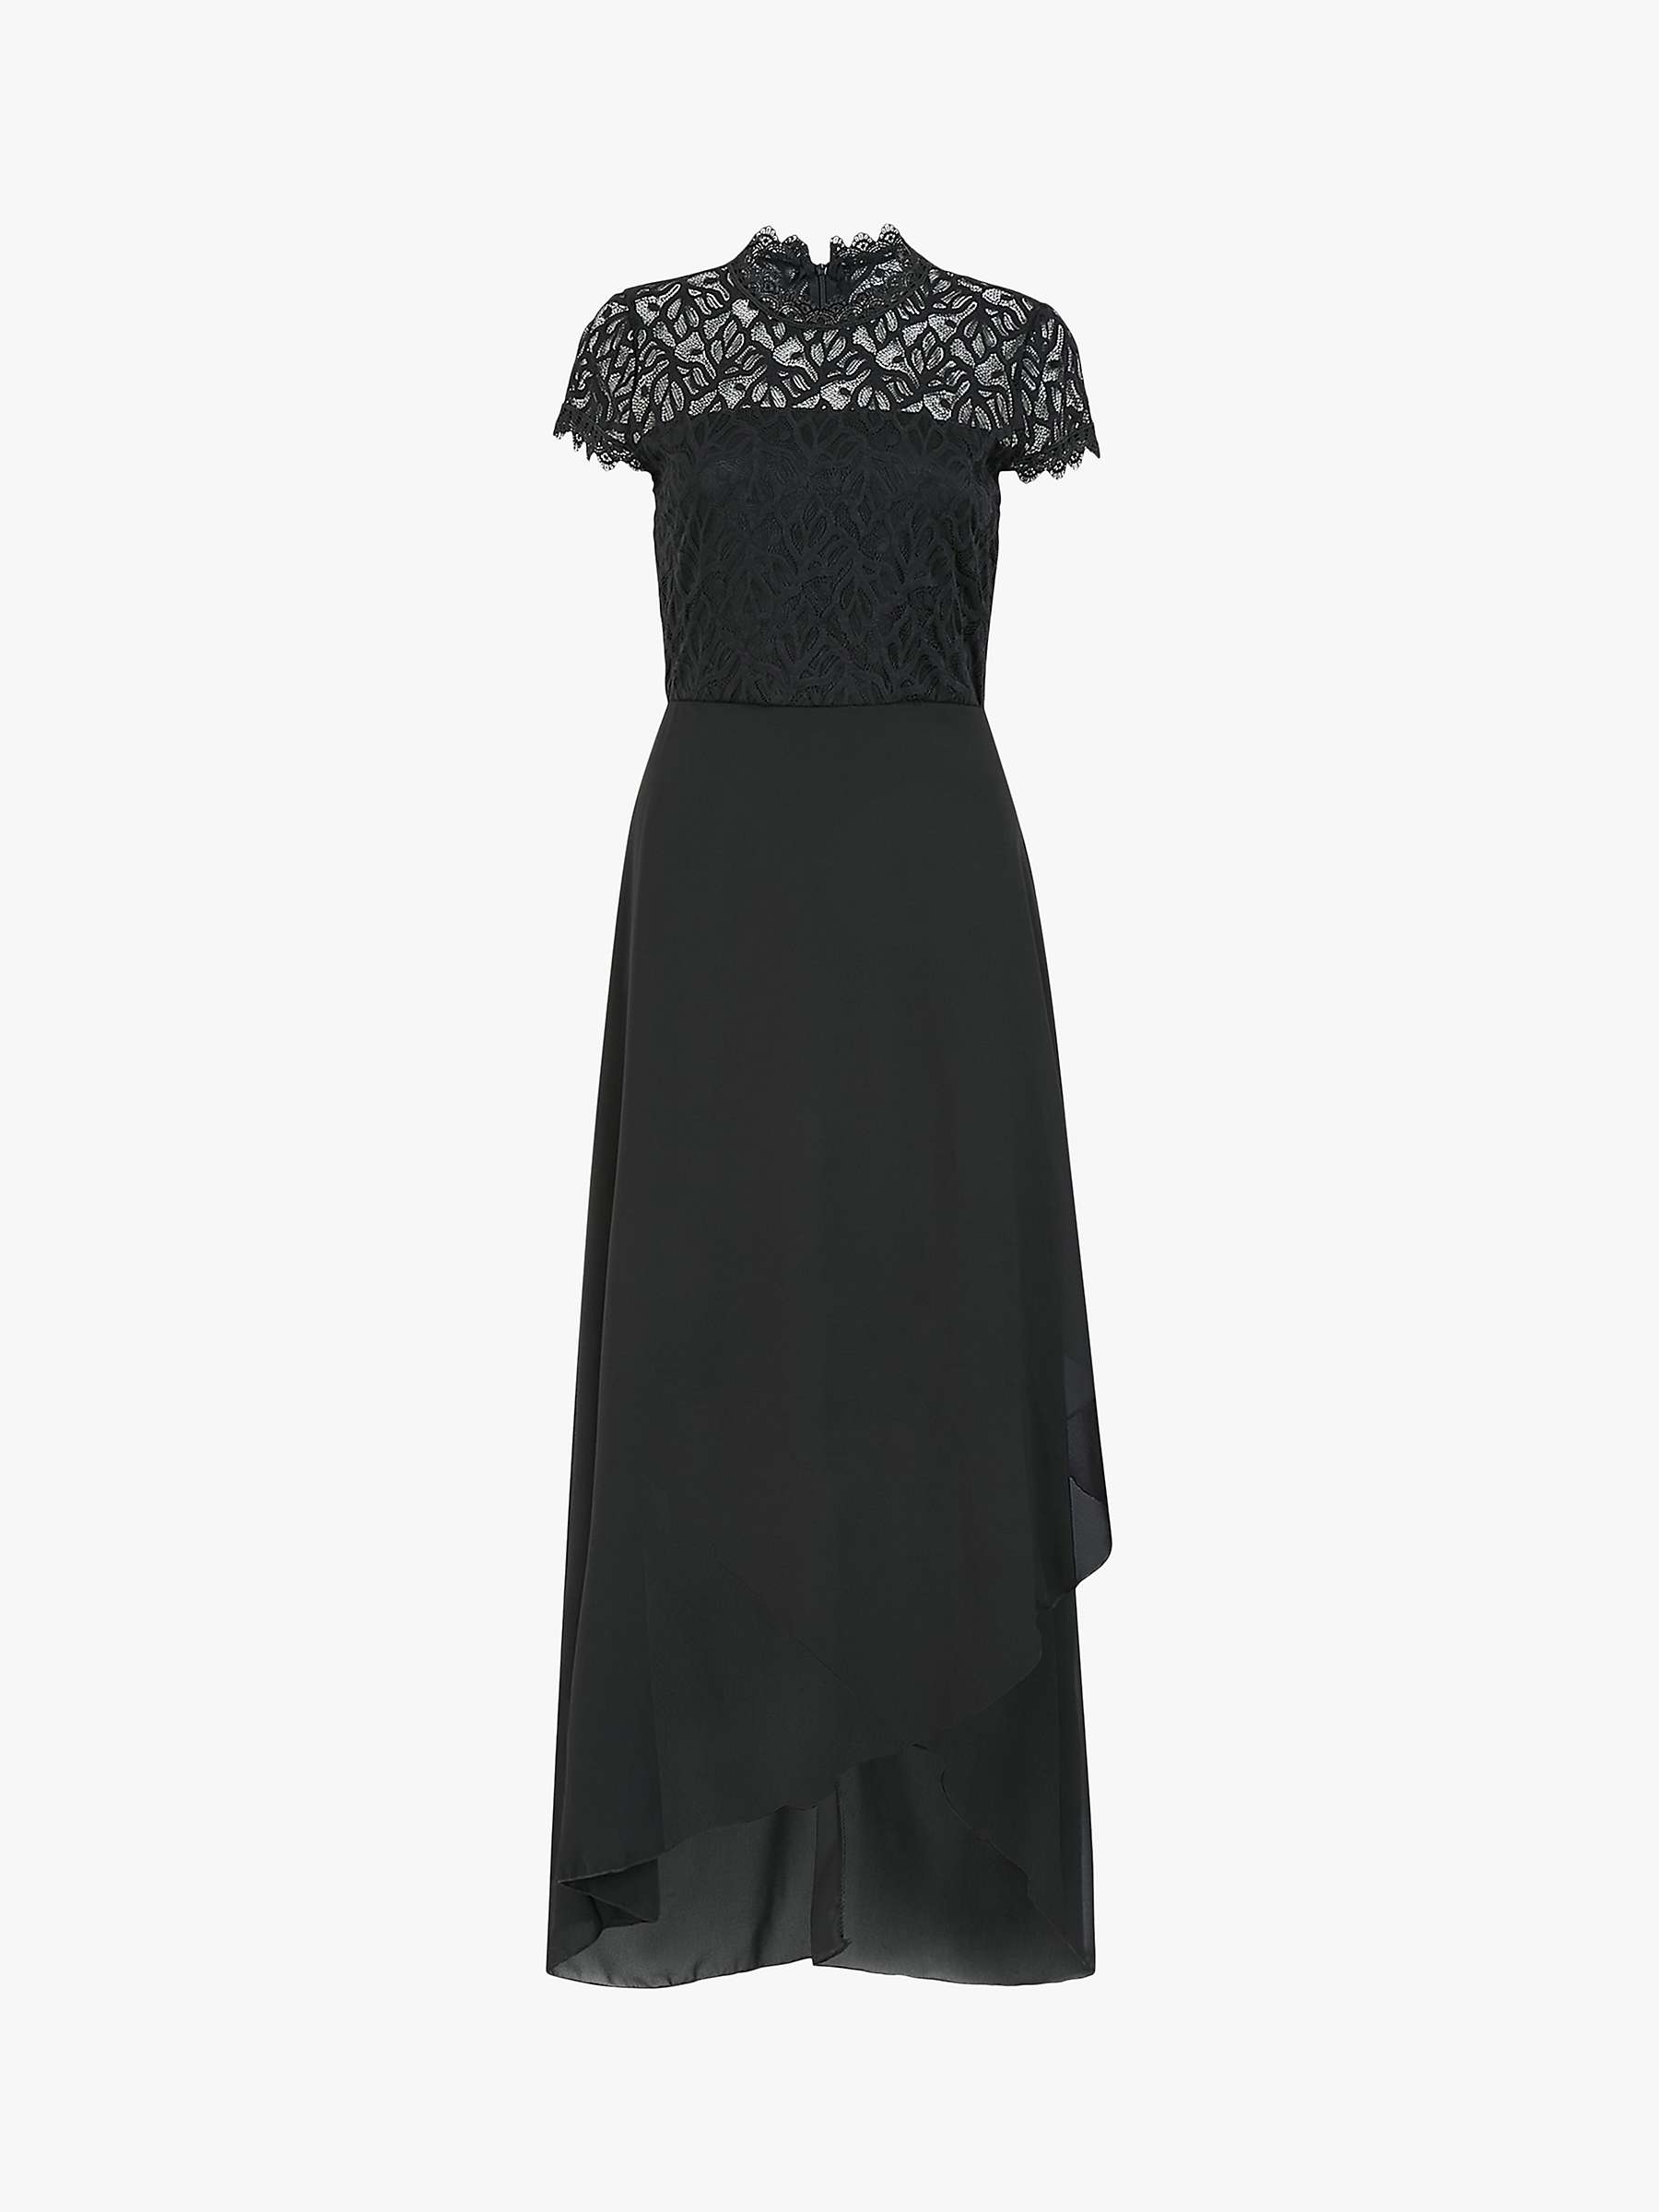 Mela London Chiffon Lace Maxi Dress, Black at John Lewis & Partners